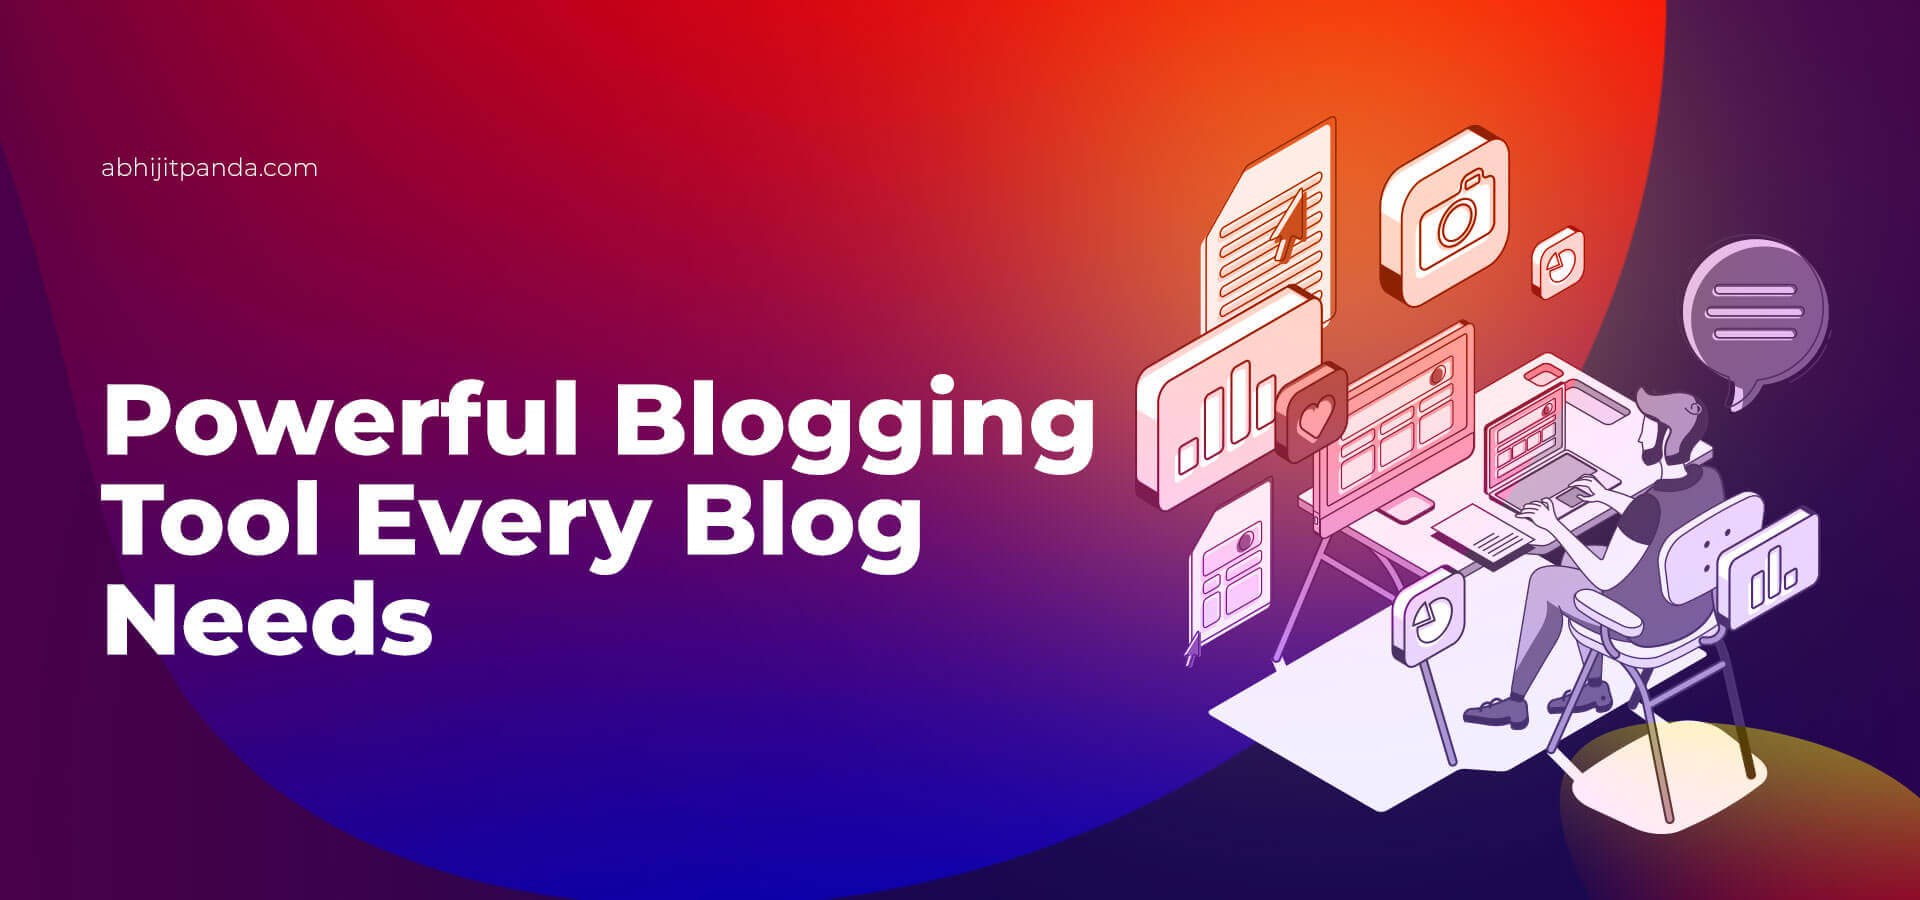 Best Blogging Tools & Resources